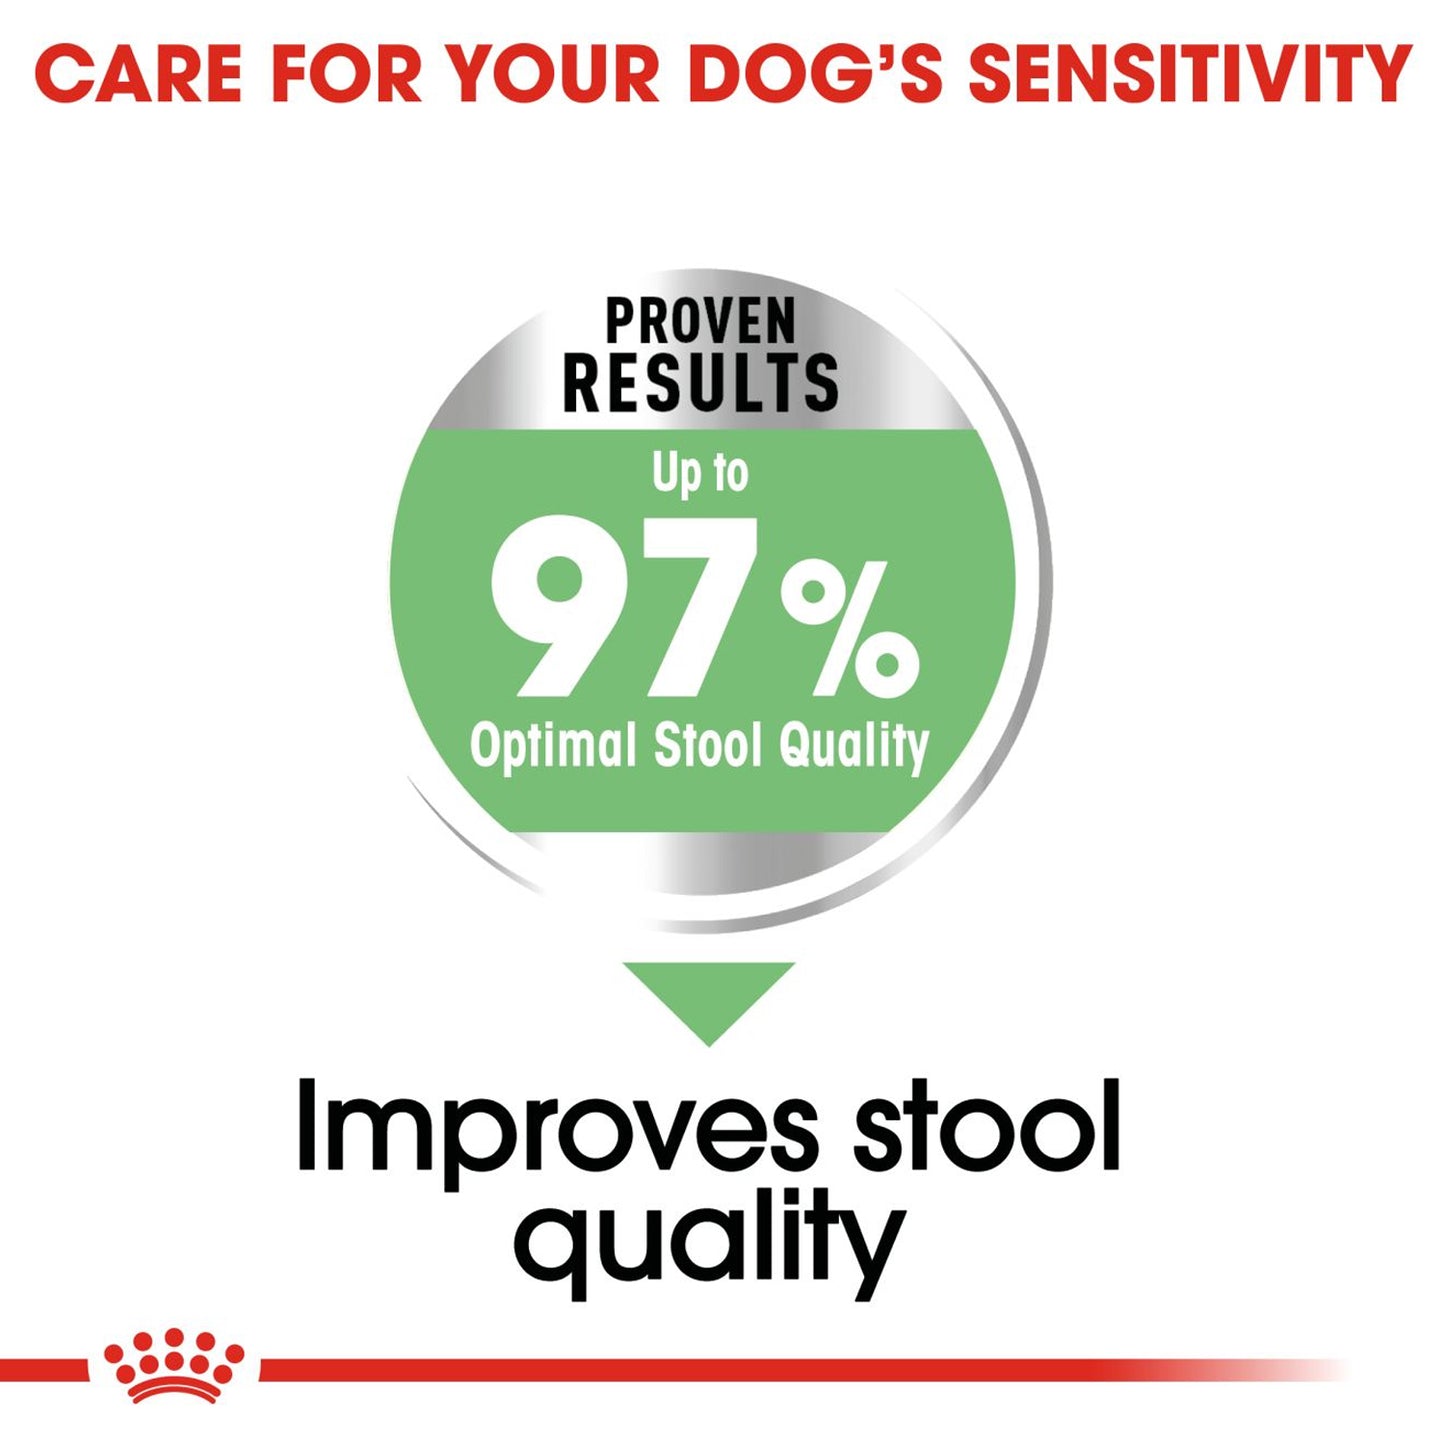 Royal Canin - Maxi Digestive Care Dry Dog Food